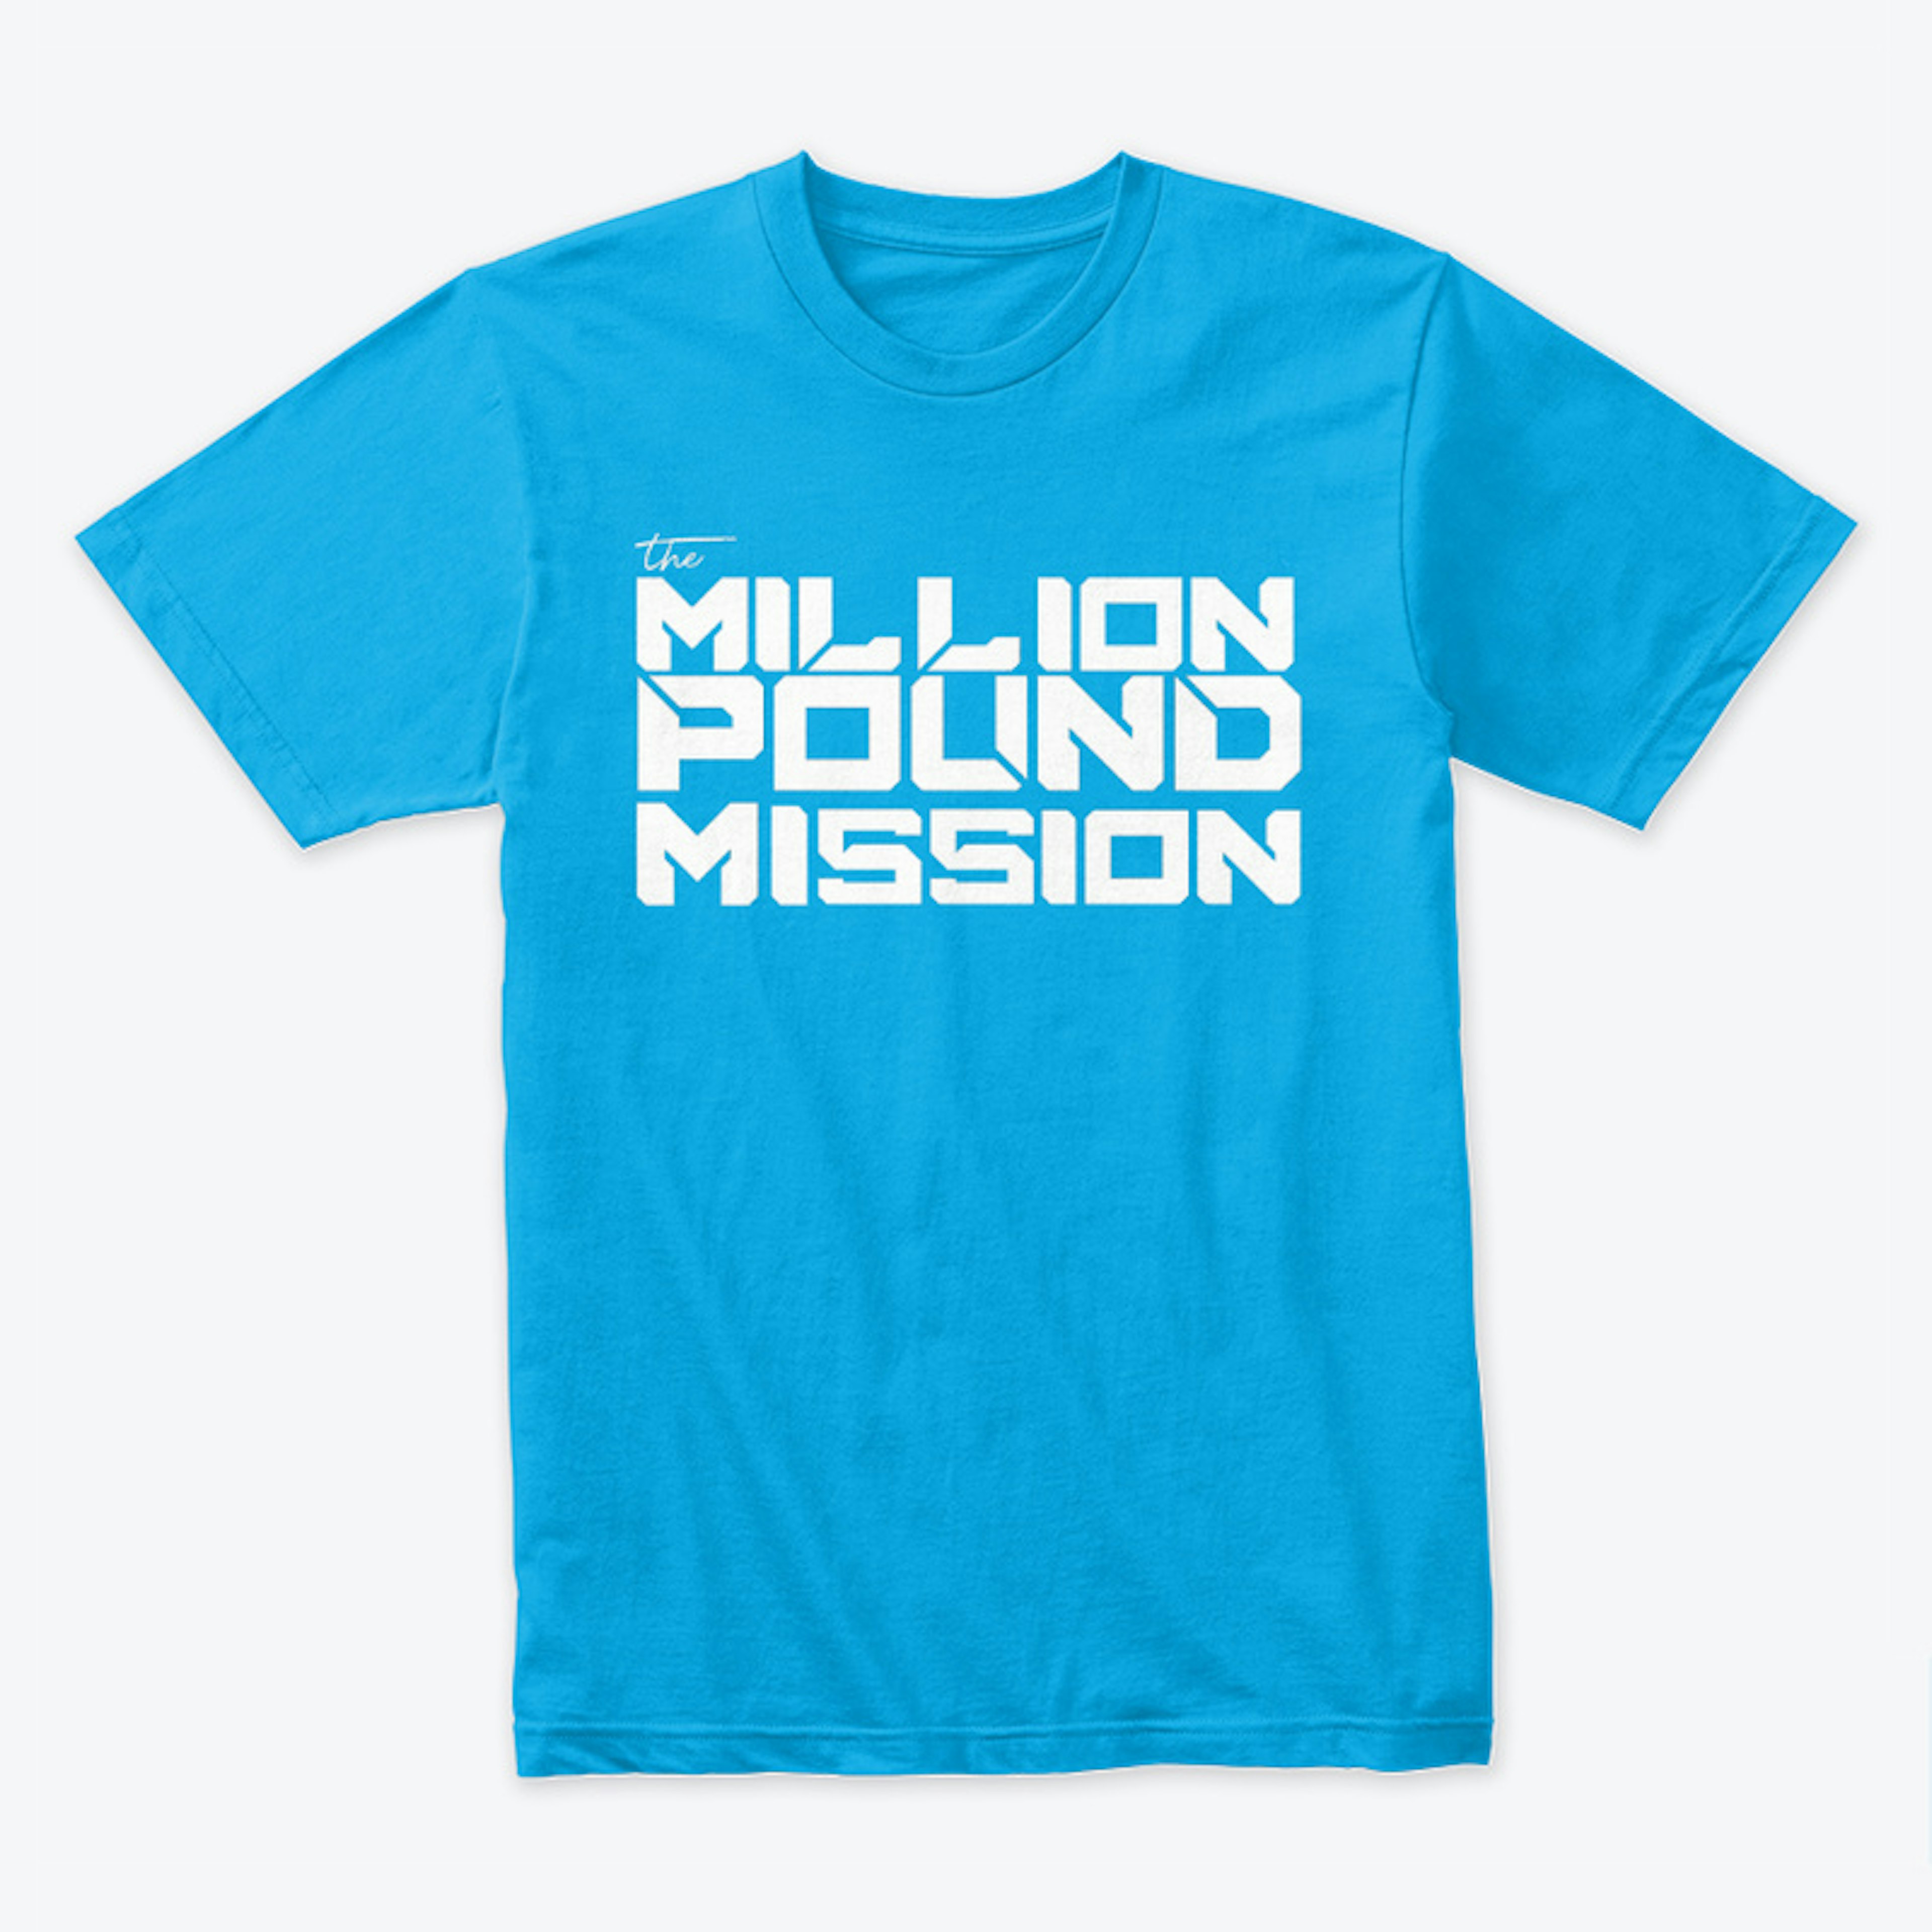 Million Pound Mission T-shirts